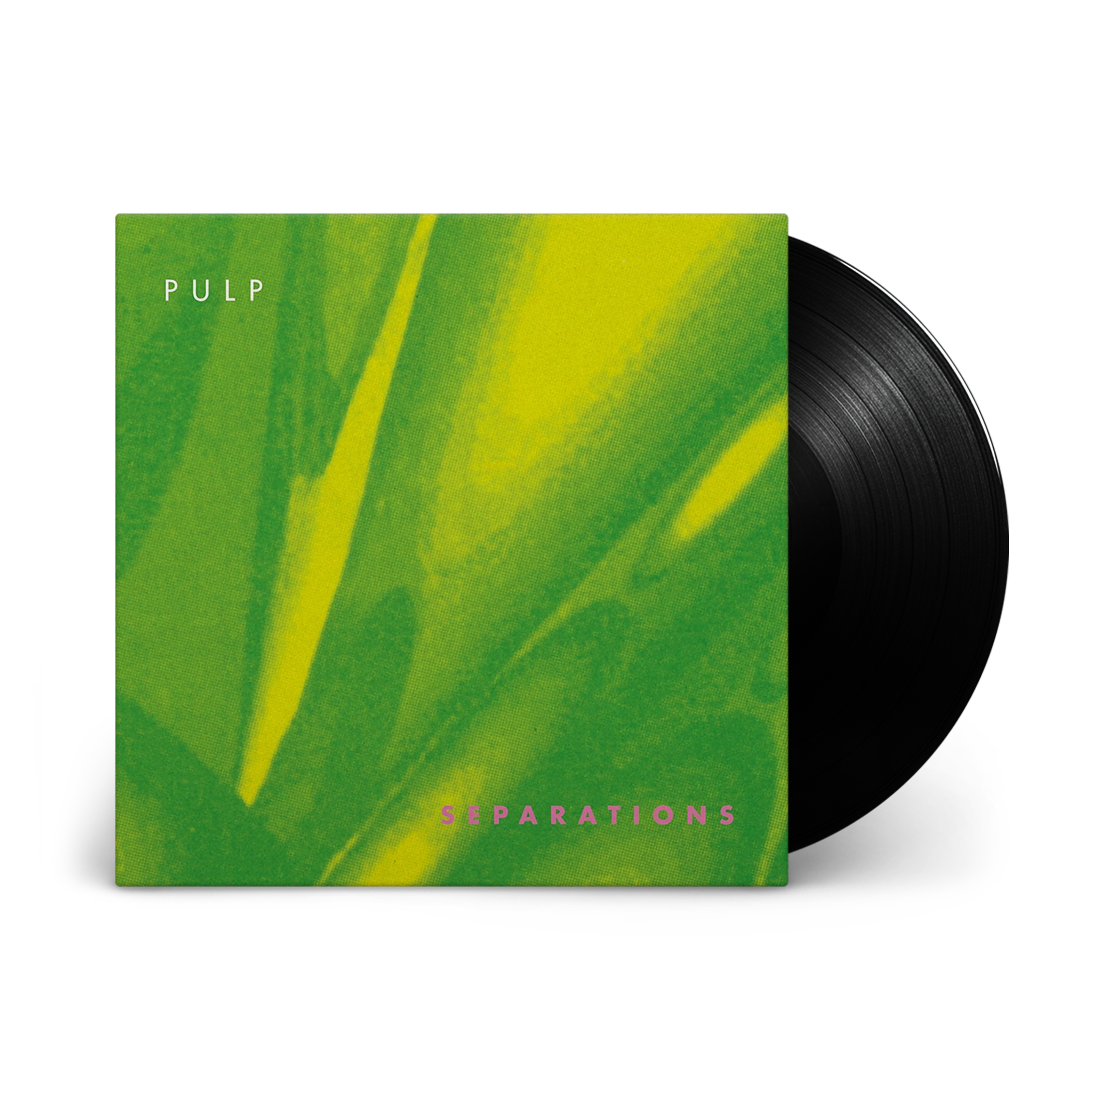 Pulp - Separations: Vinyl LP